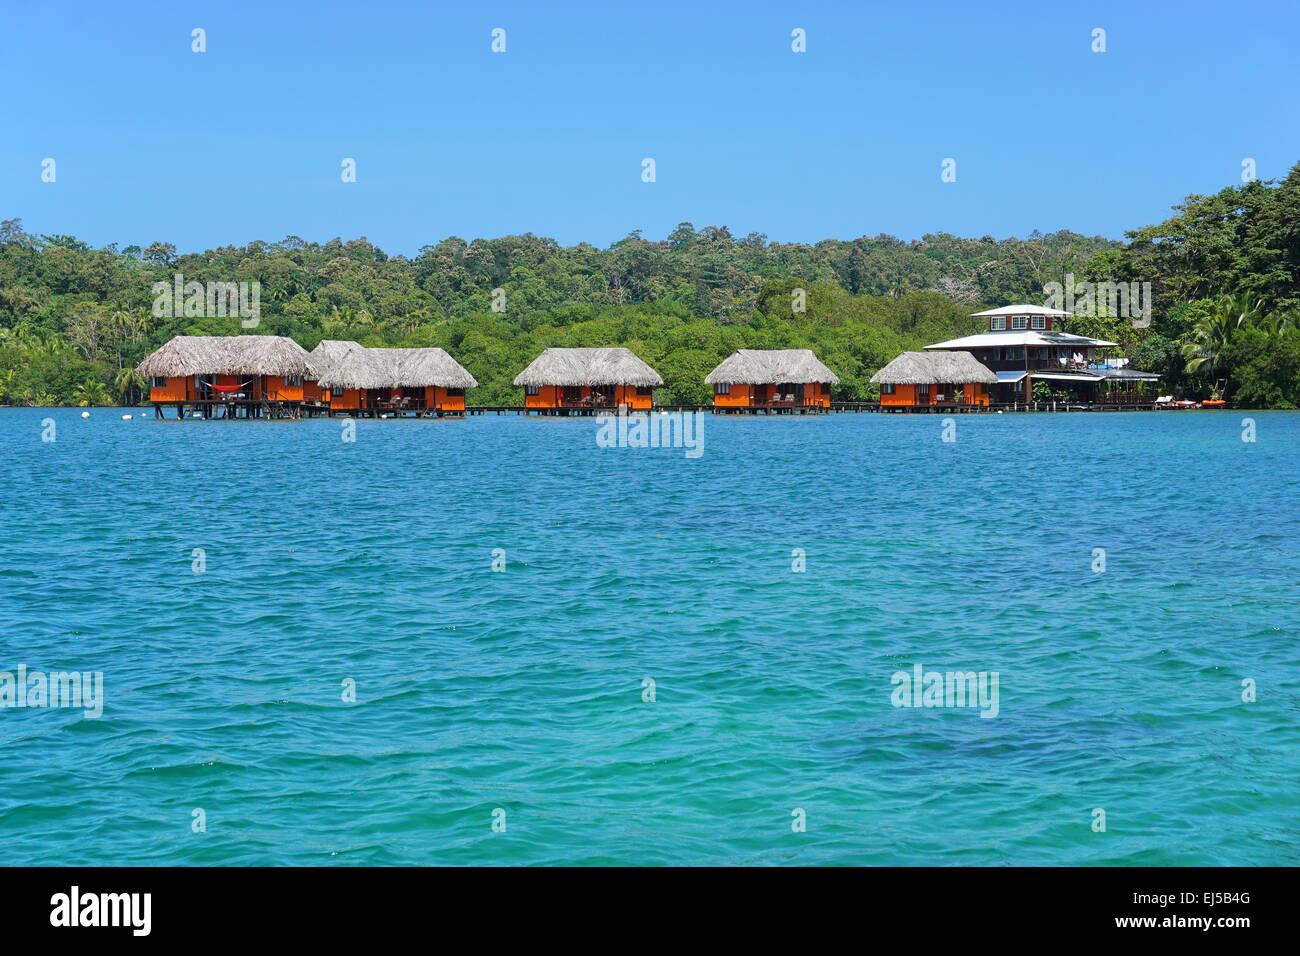 Resort tropicale con bungalow sul mare dei Caraibi, isola Bastimentos, Bocas del Toro, Panama Foto Stock